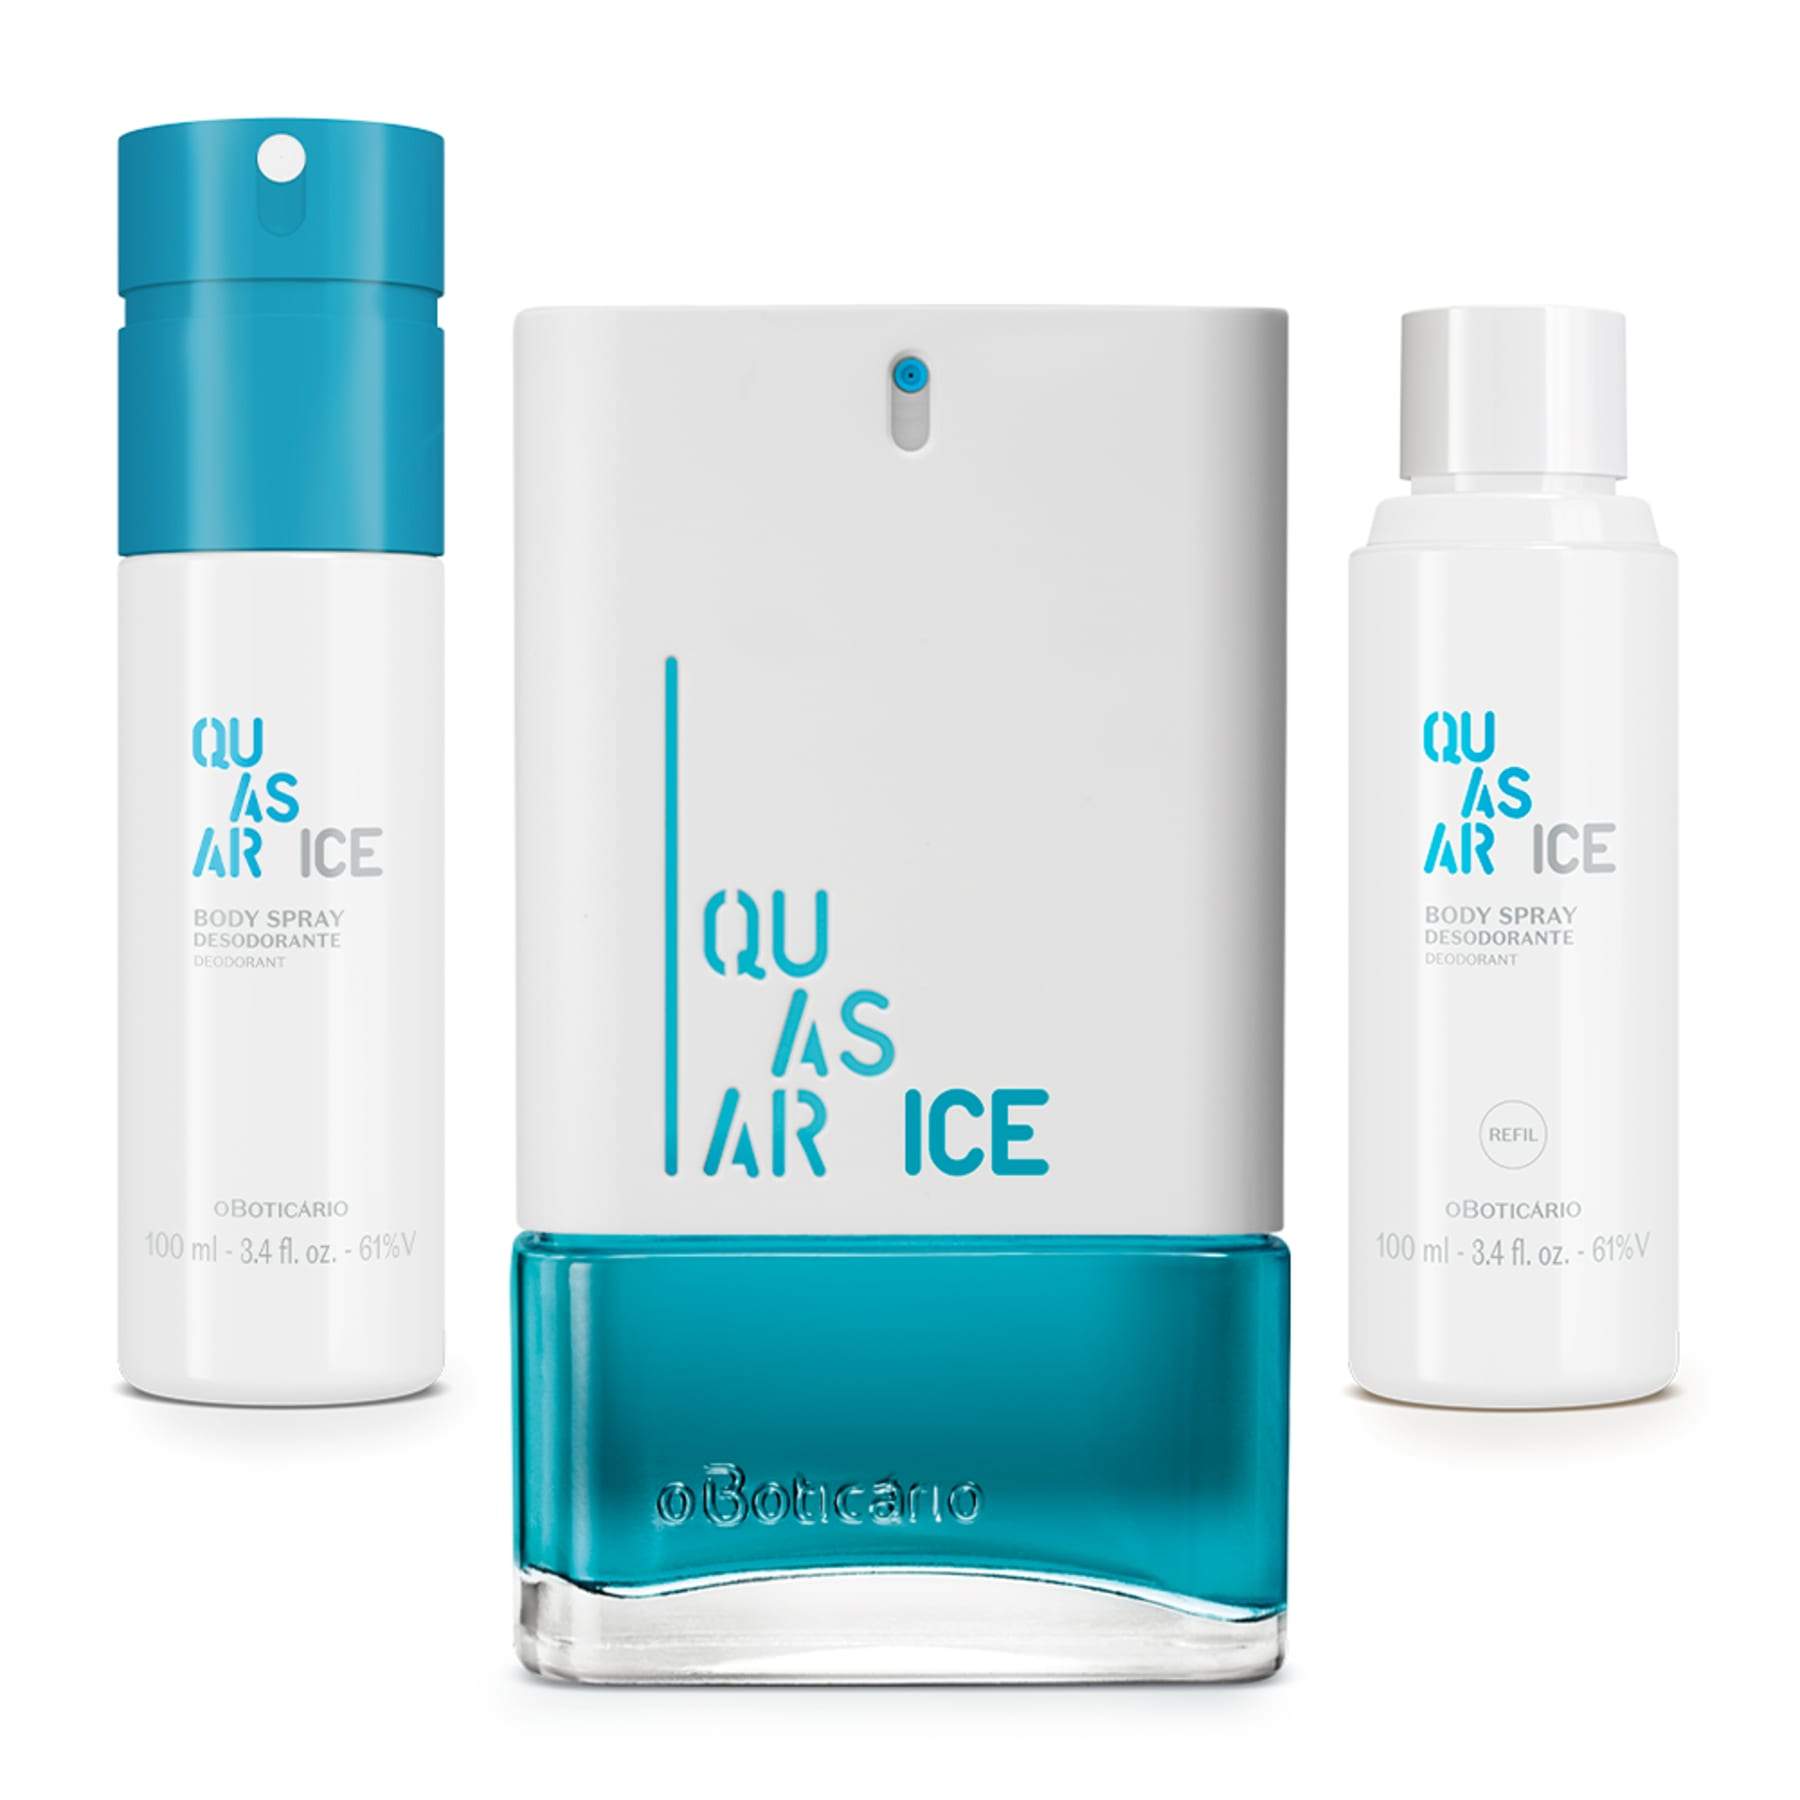 Kit Quasar Ice: Deodorant Cologne 100ml + Body Spray 100ml + Refill Body Spray 100ml - o Boticario